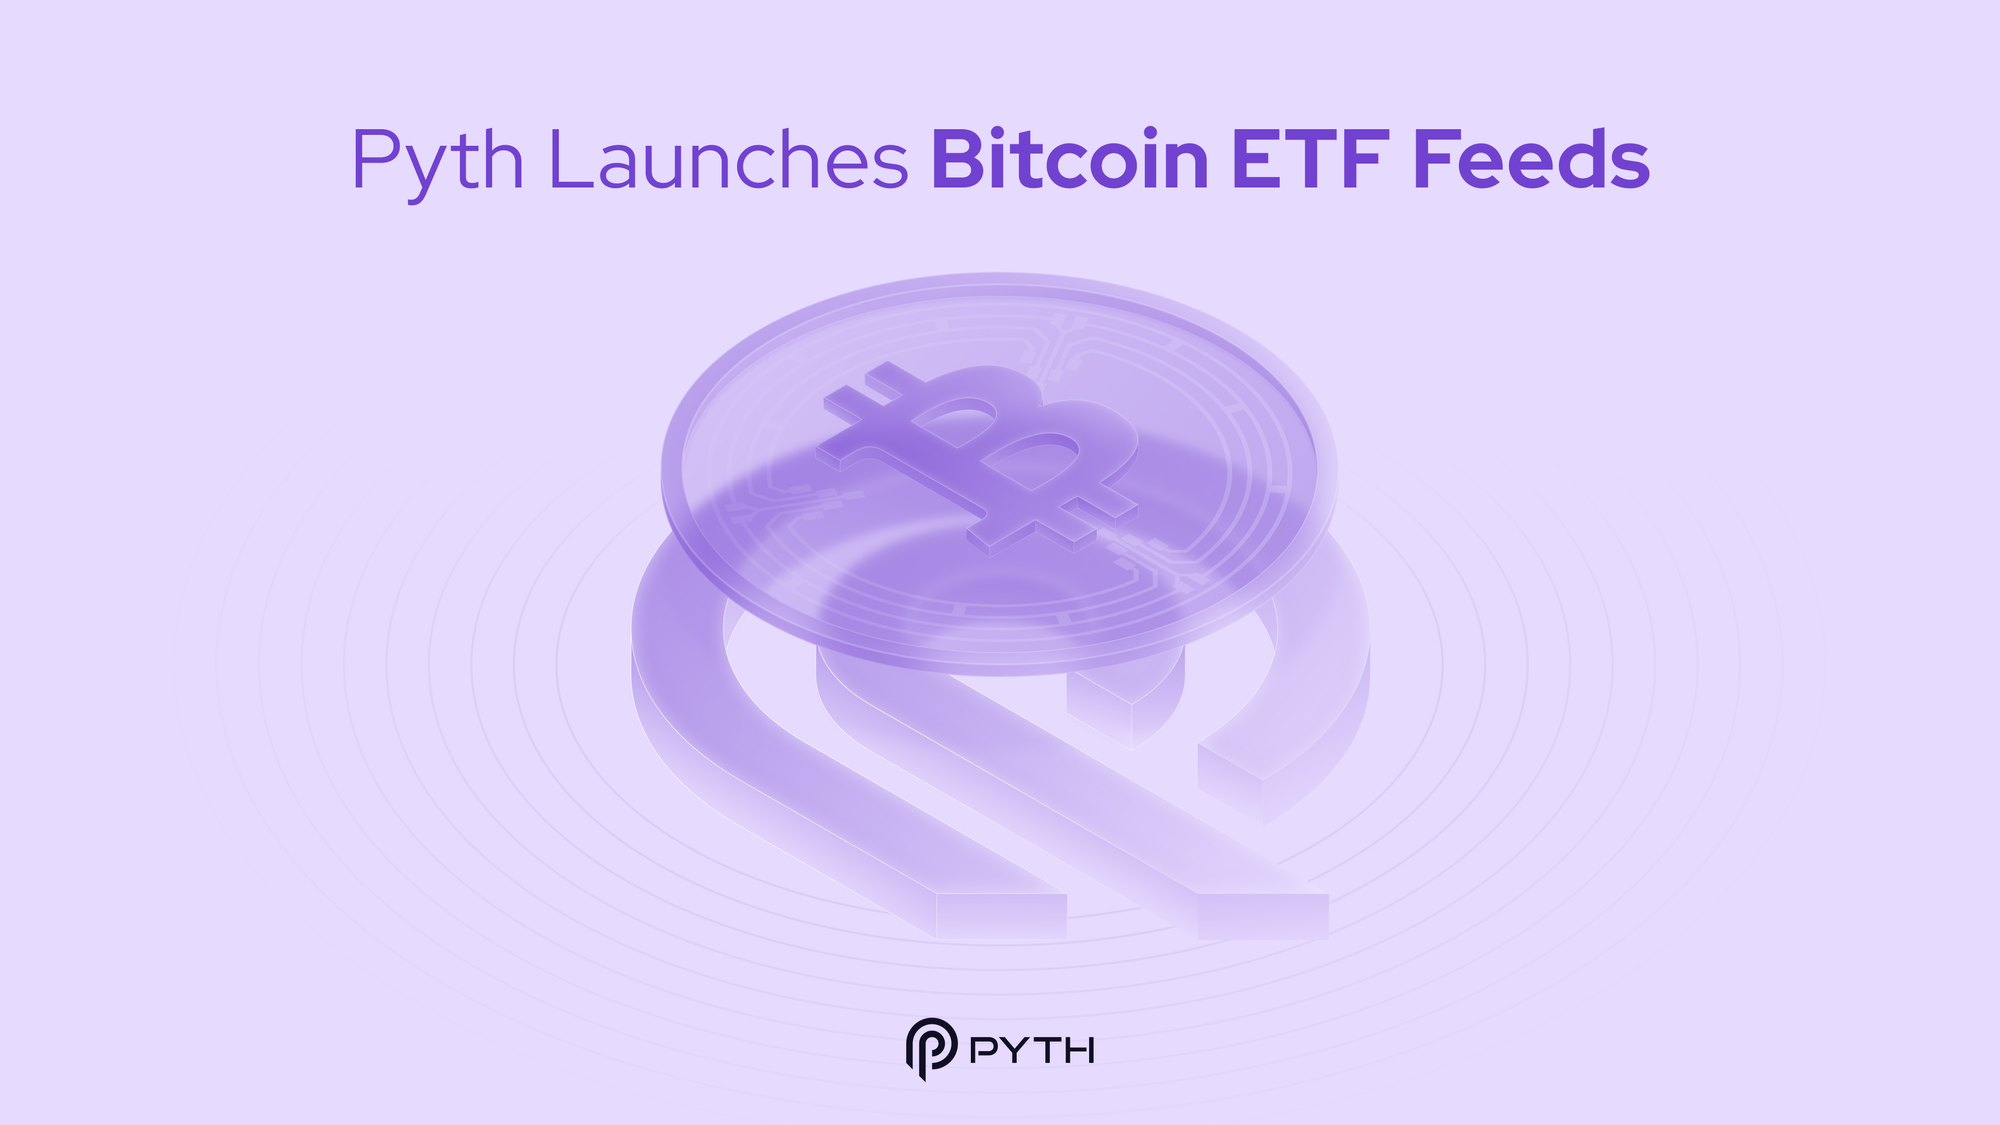 Bitcoin ETF Price Feeds on Pyth Network